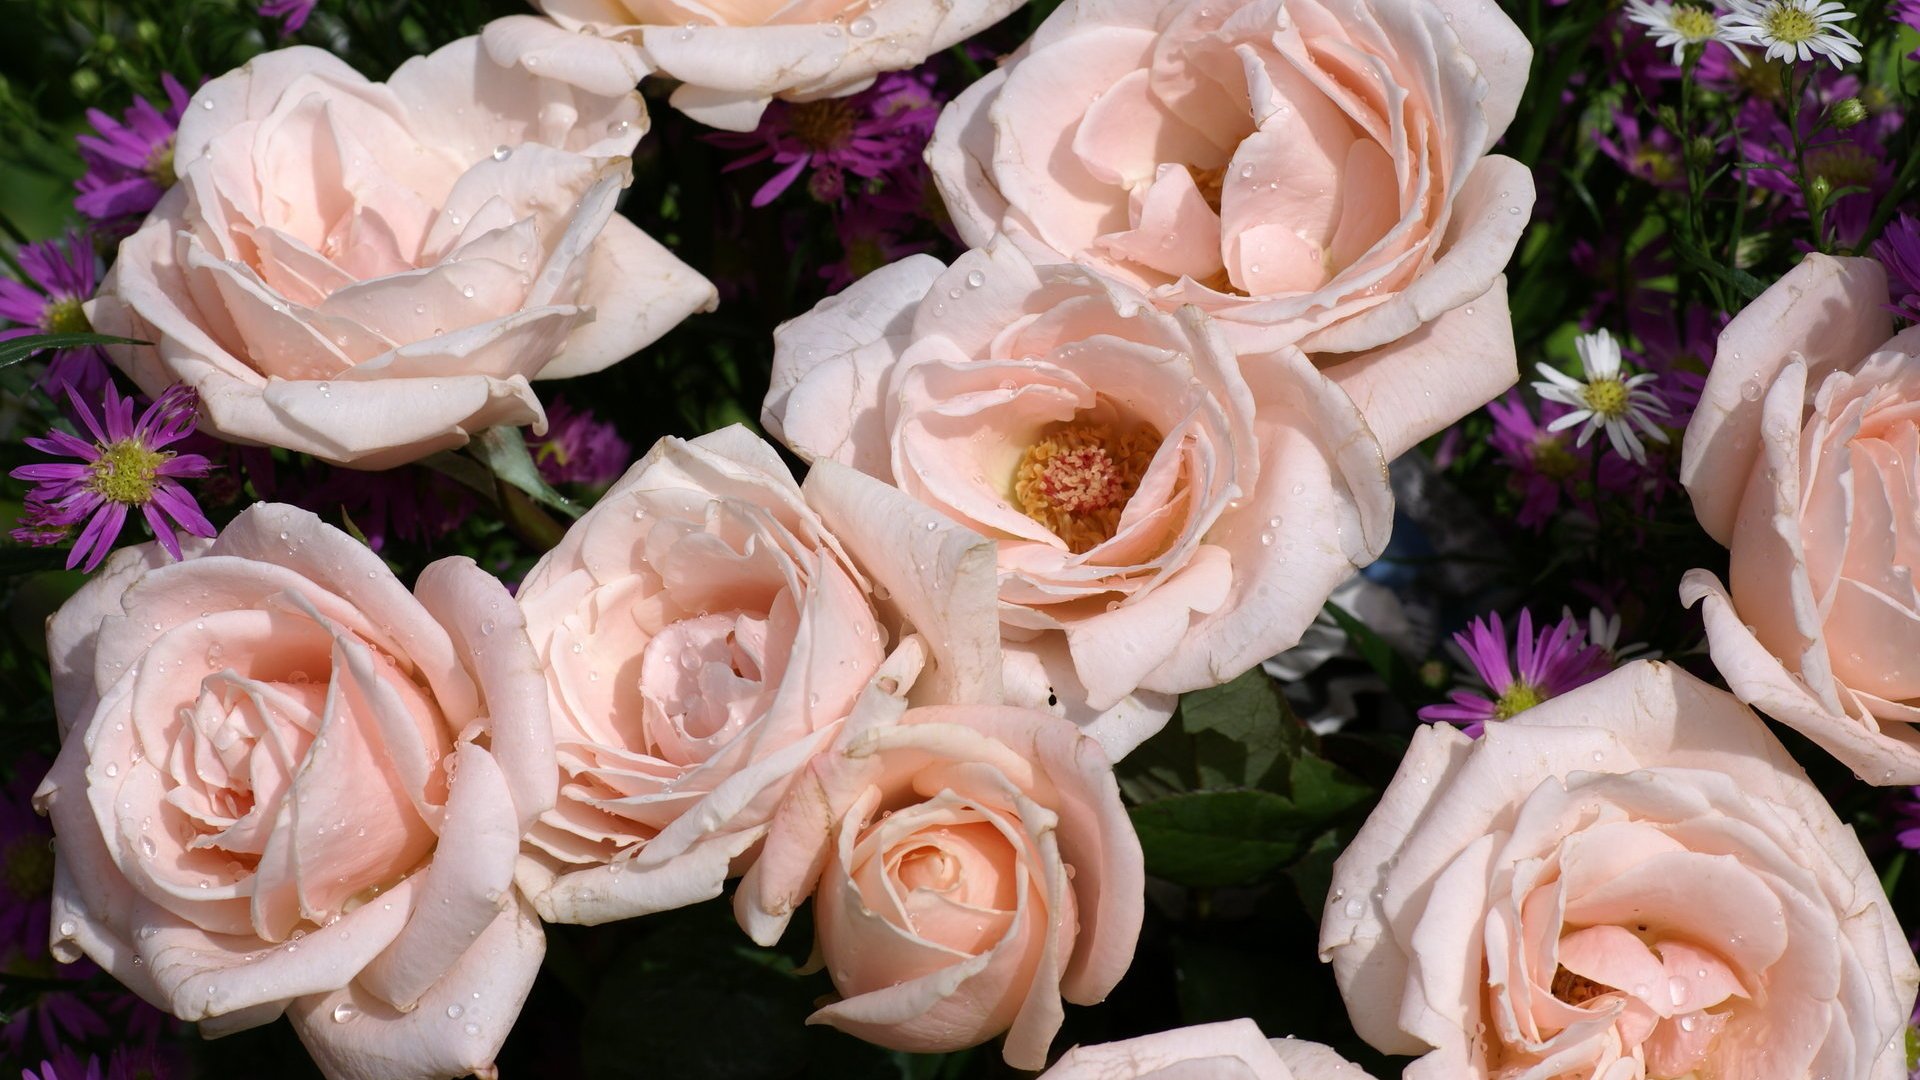 Rose is beautiful